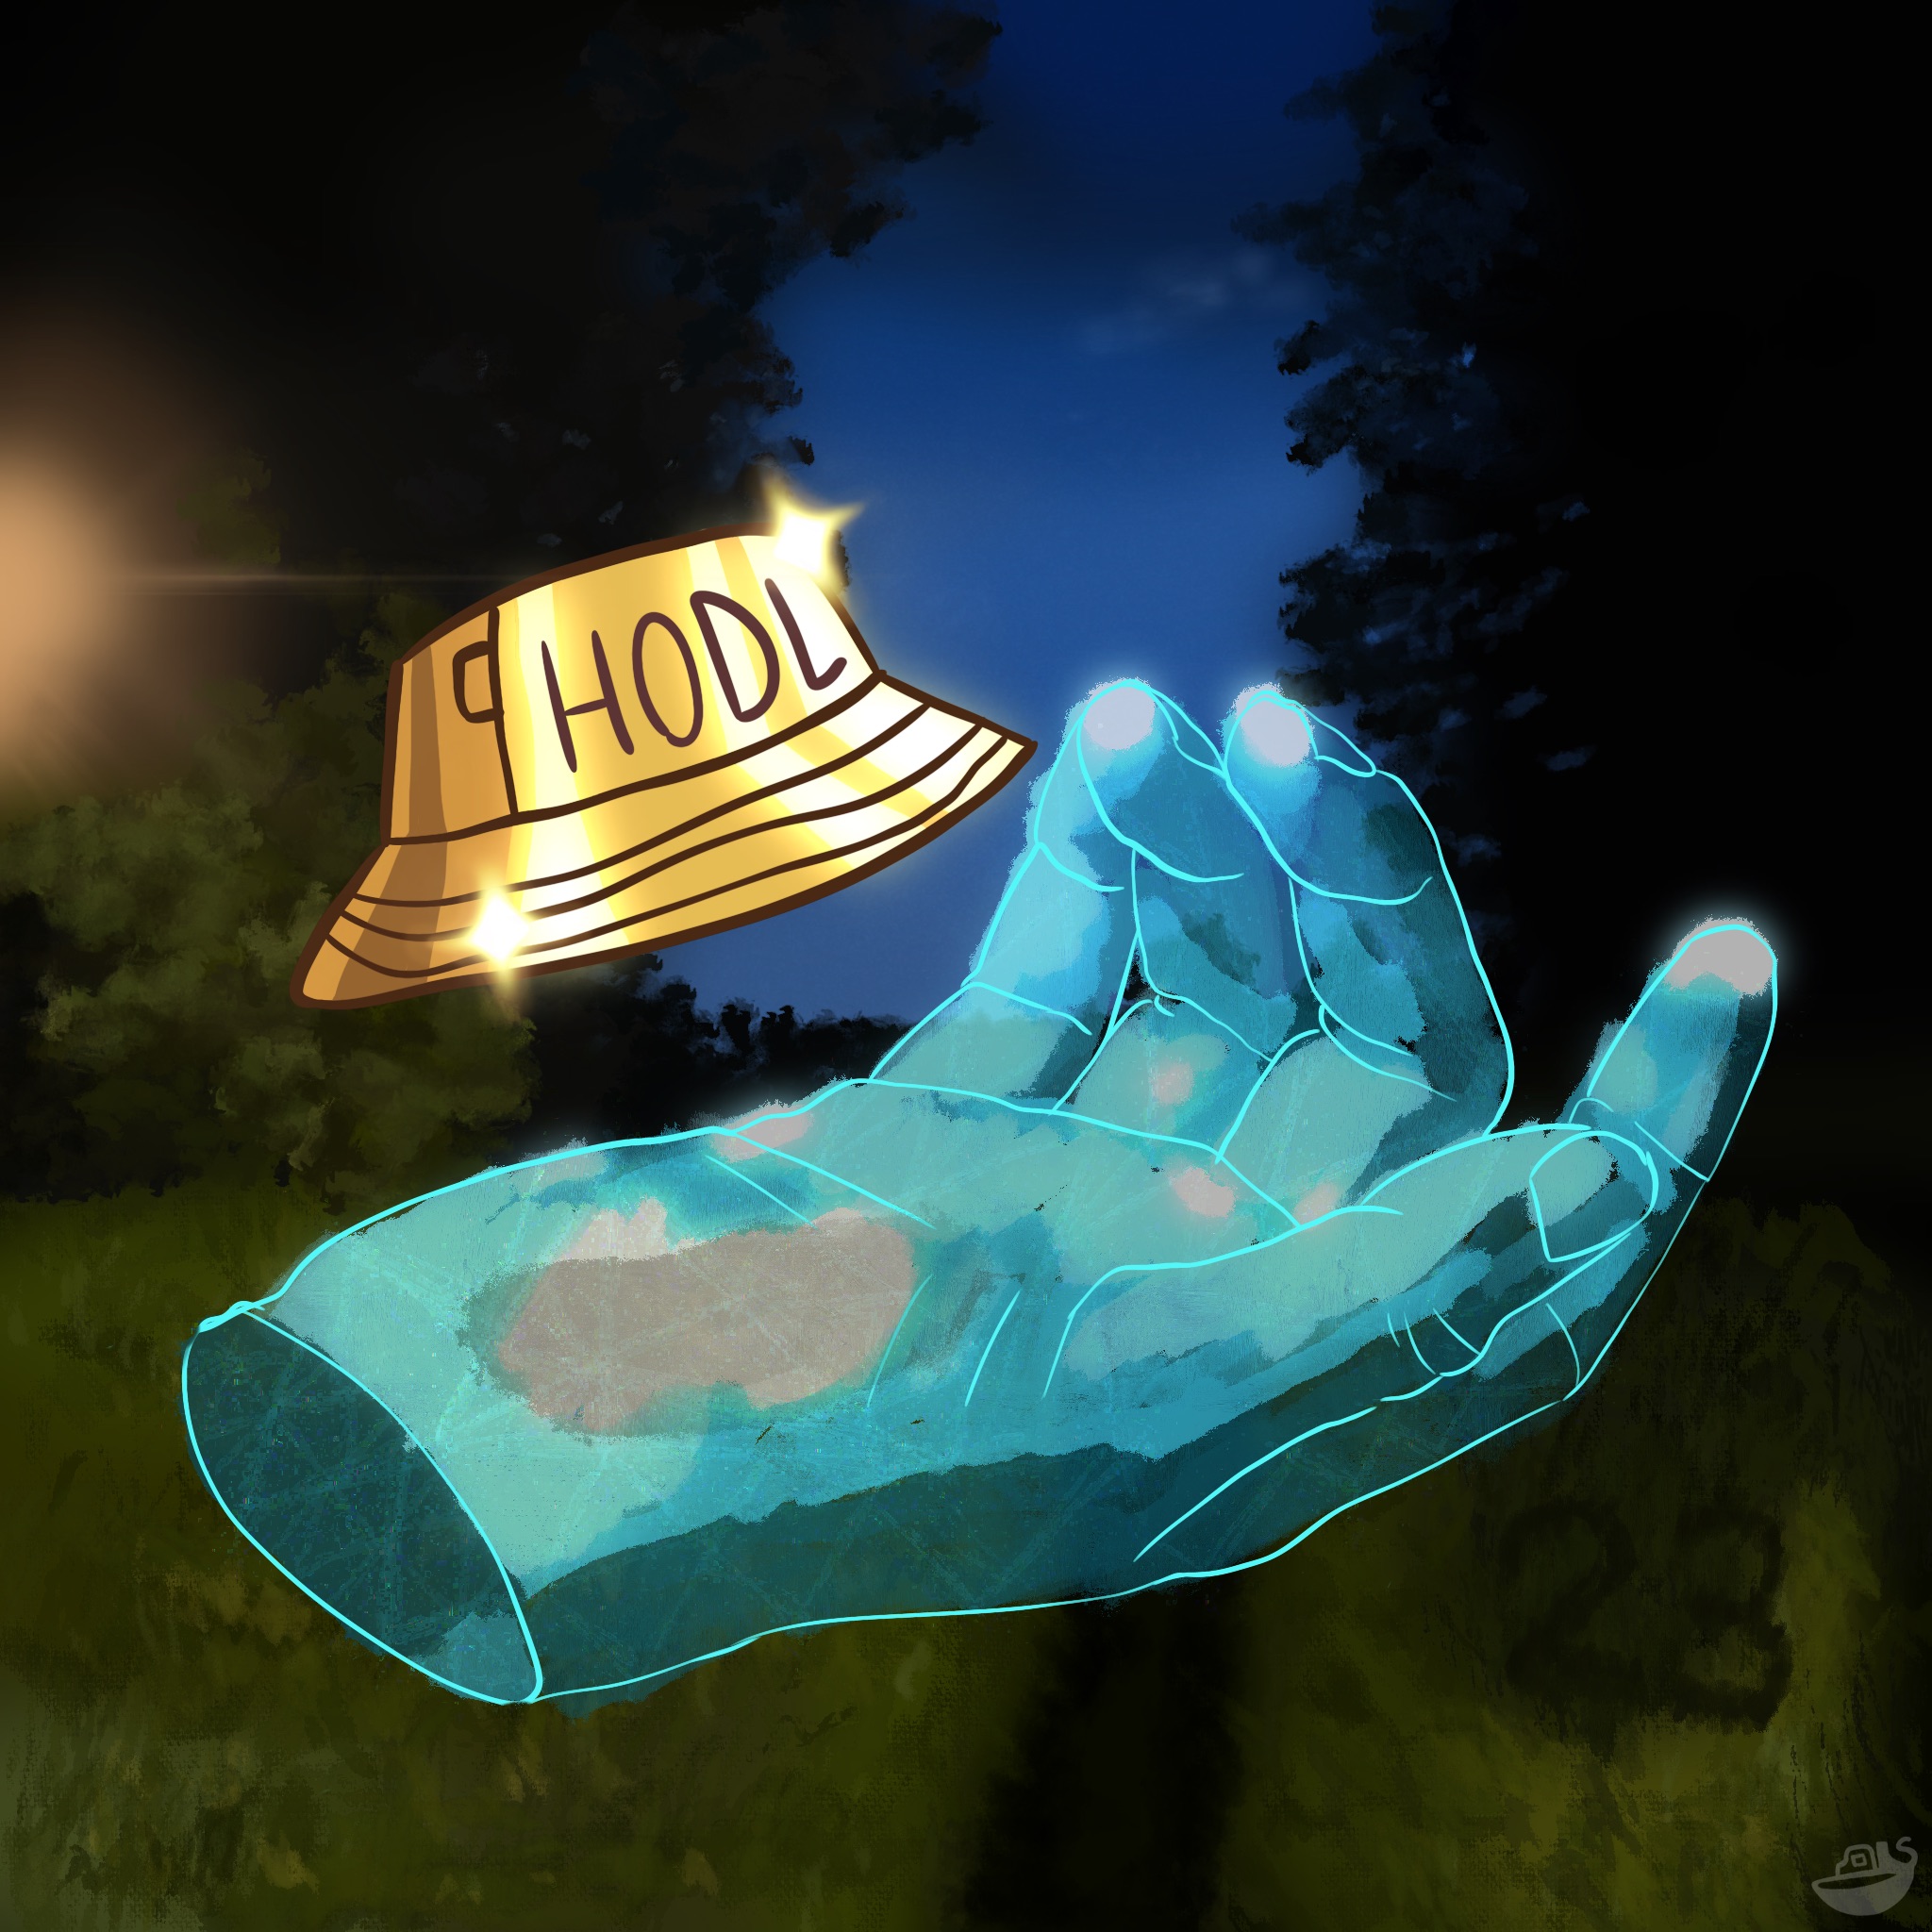 DIAMOND HAND HODLER – by u/_ships